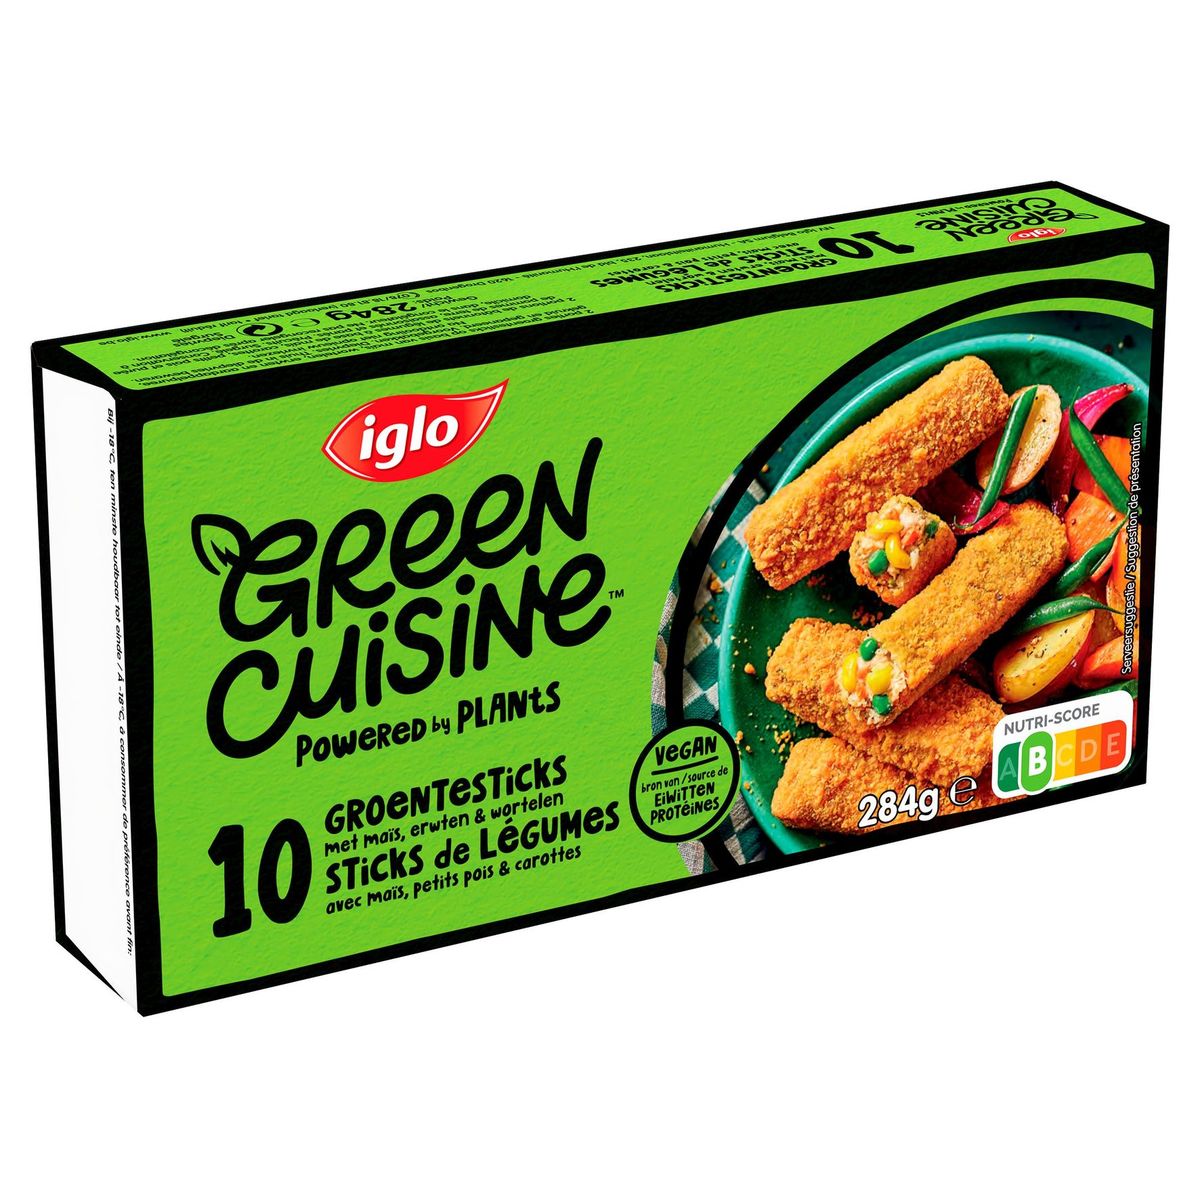 iglo Green Cuisine 10 Groentesticks met Maïs, Erwten & Wortelen 284 g